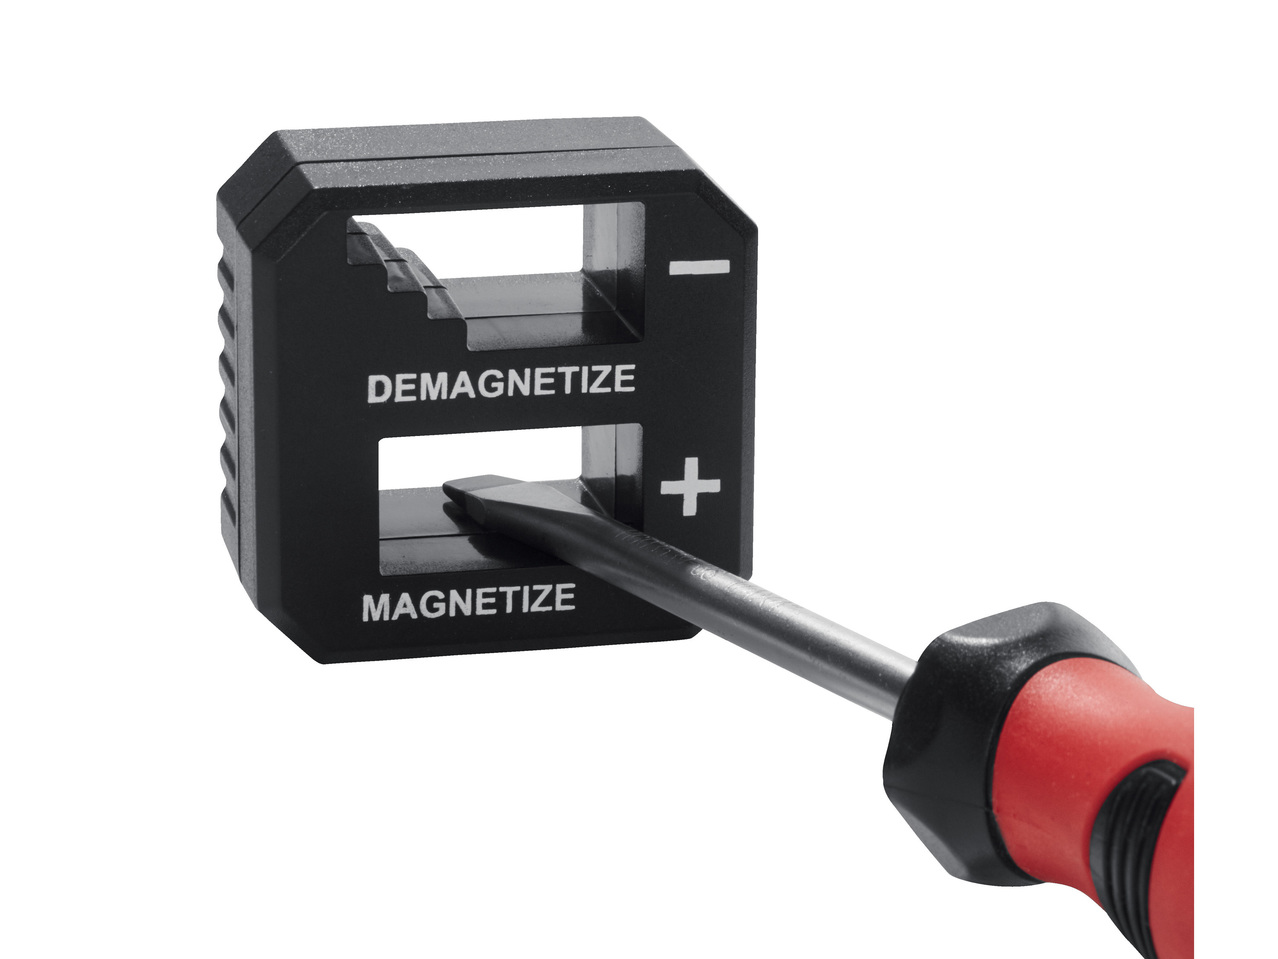 POWERFIX Magnetic DIY Accessories